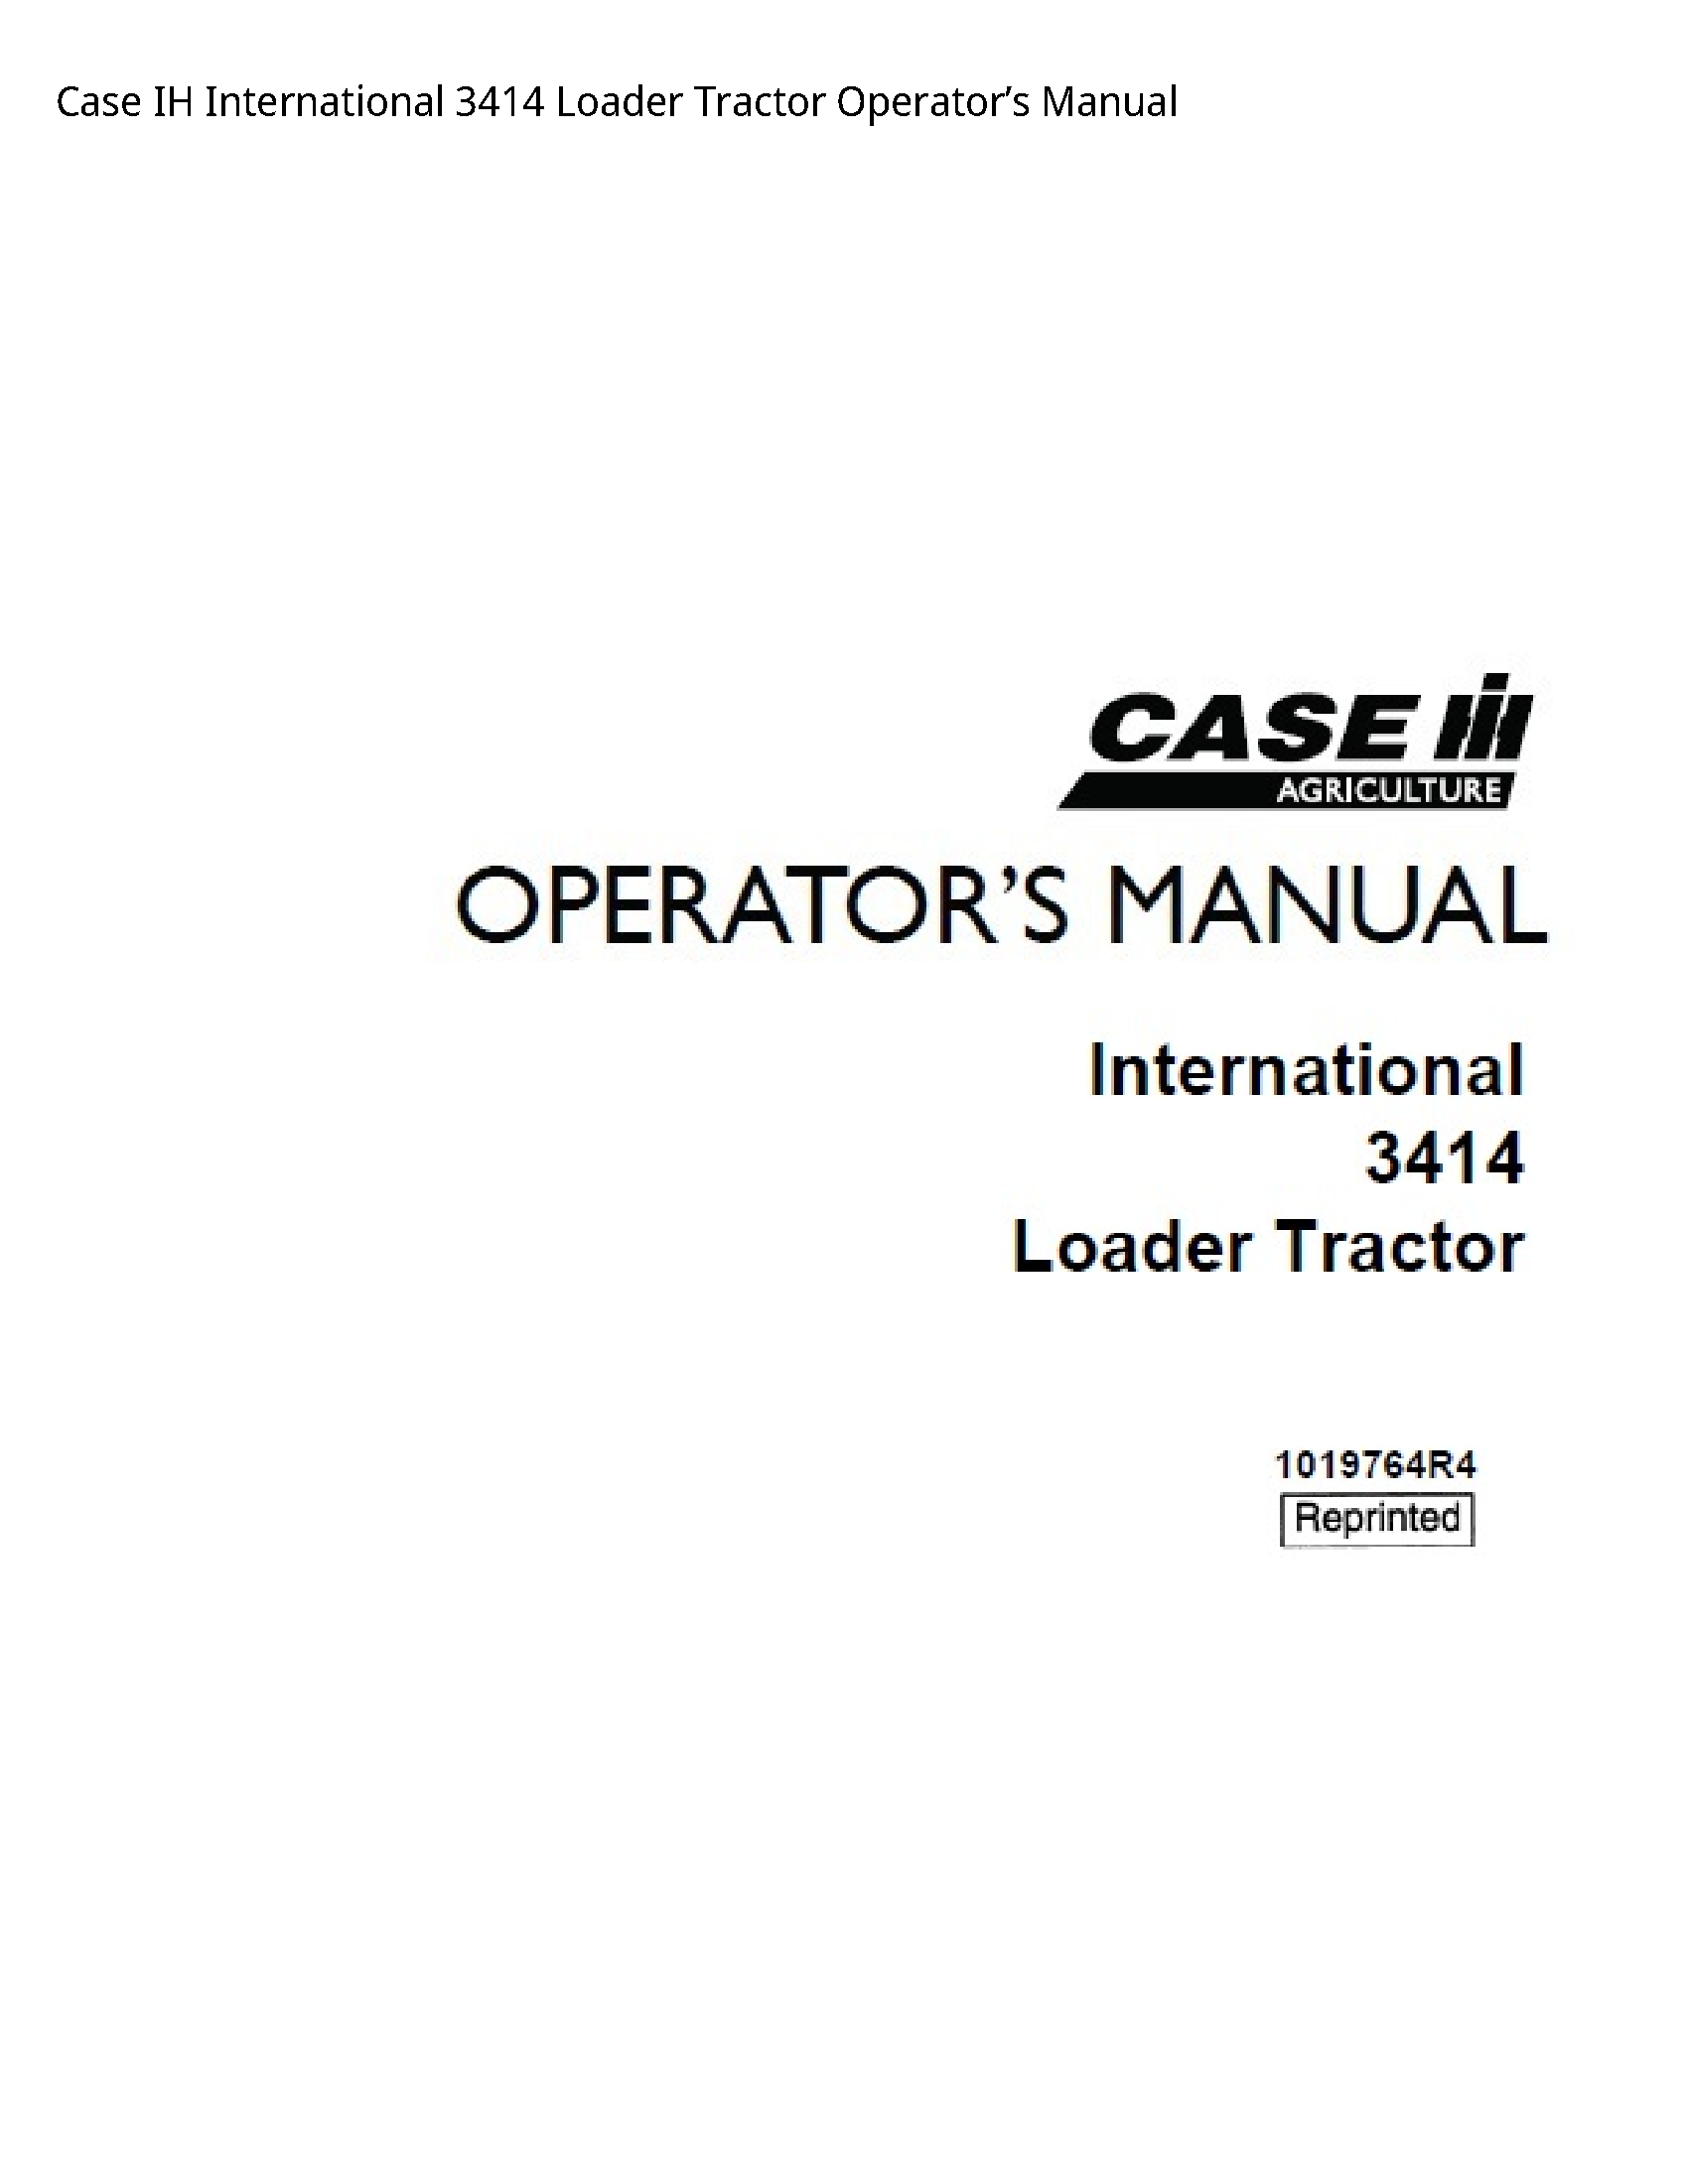 Case/Case IH 3414 IH International Loader Tractor Operator’s manual